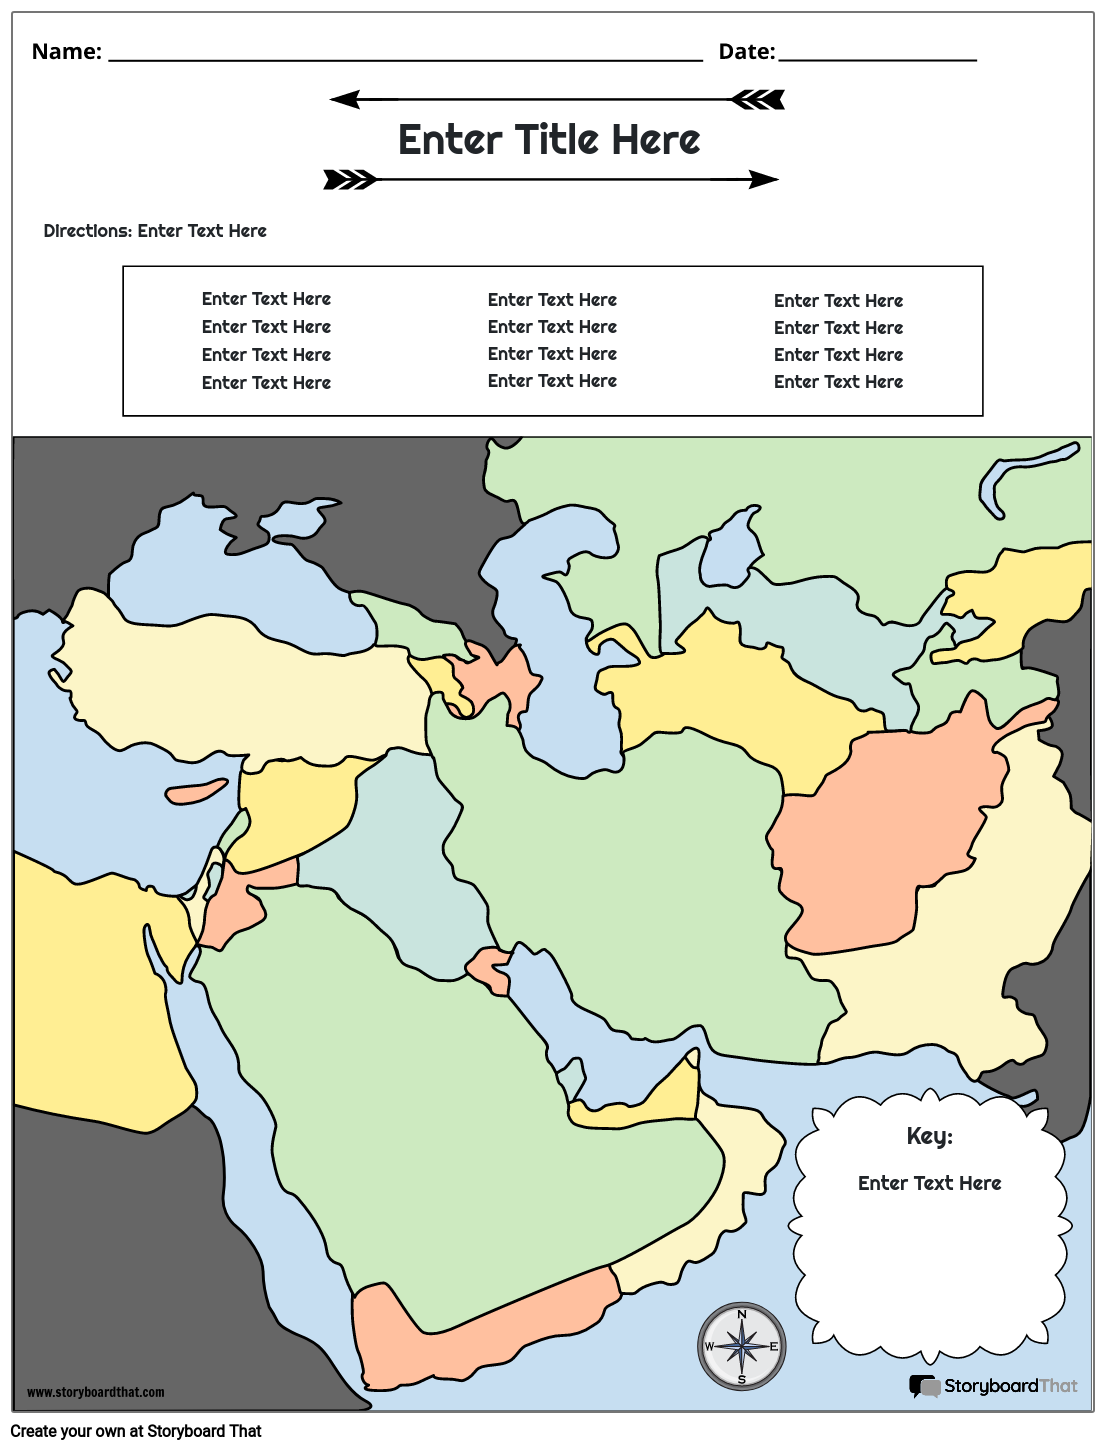 Mellanöstern Karta